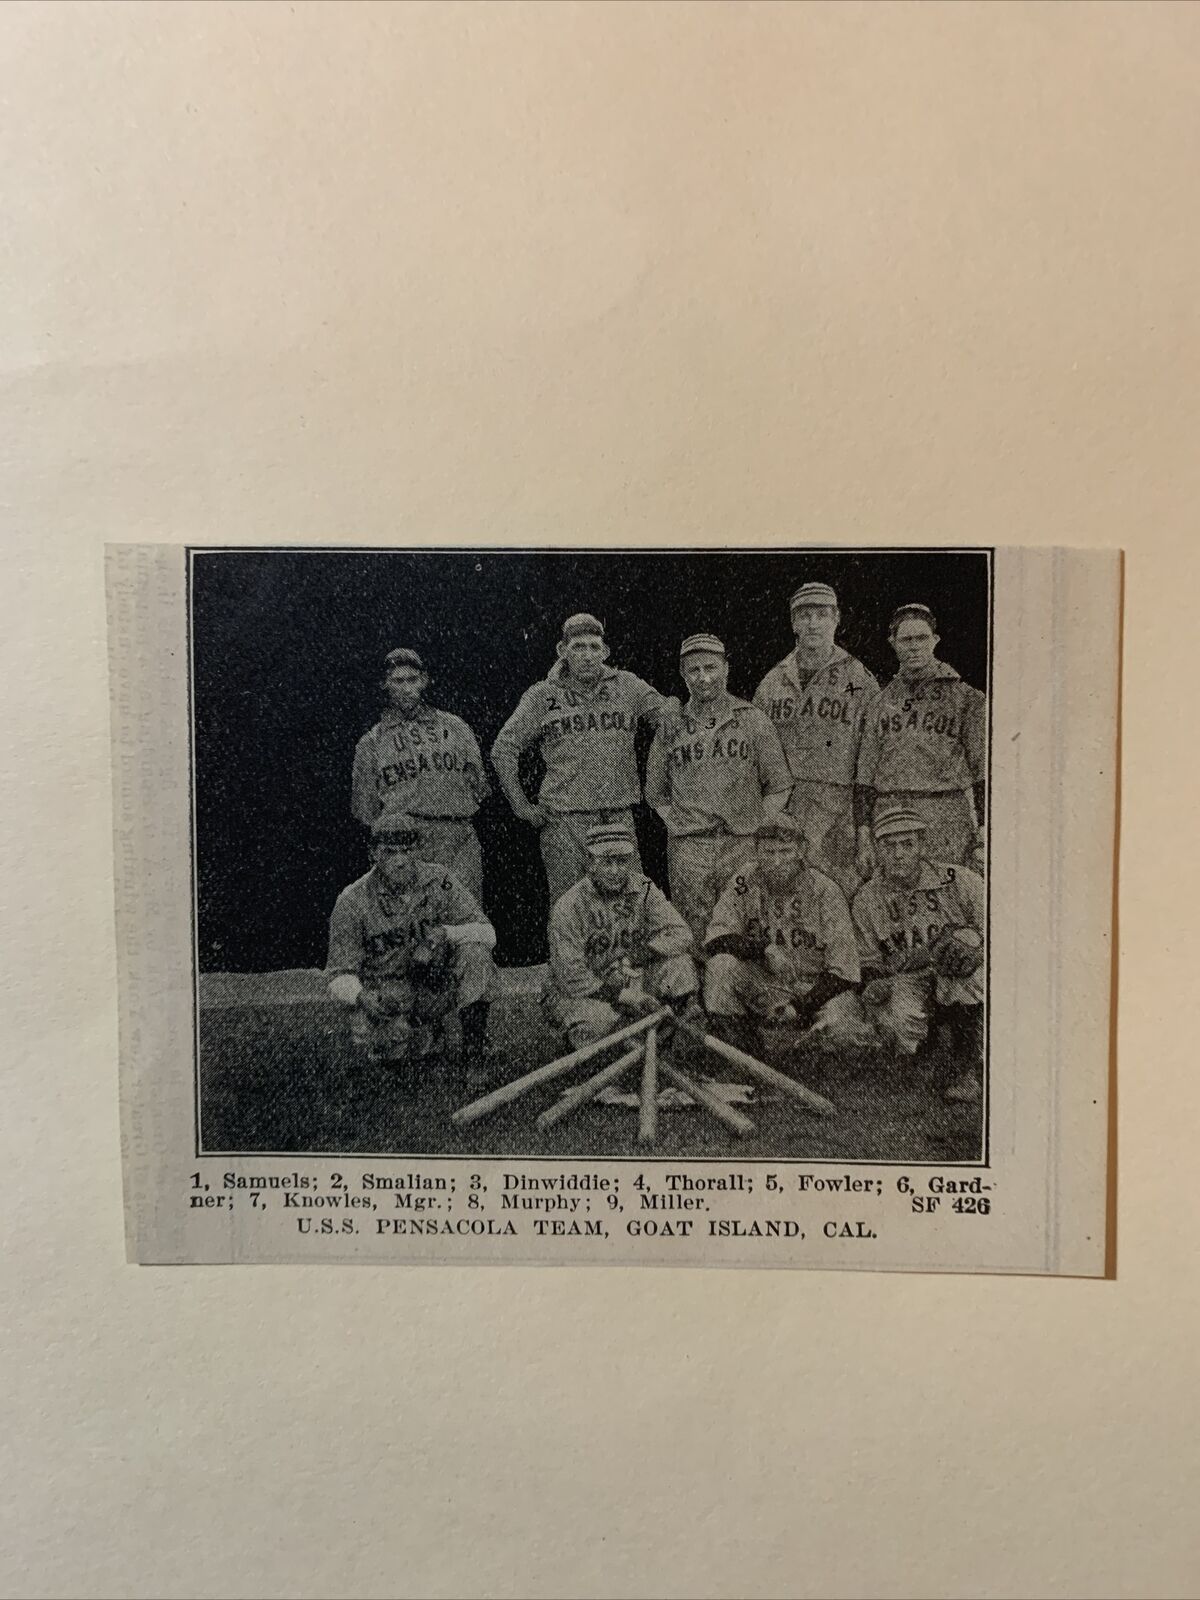 U.S.S. Pensacola Goat Island CA California 1906 Baseball Team Picture